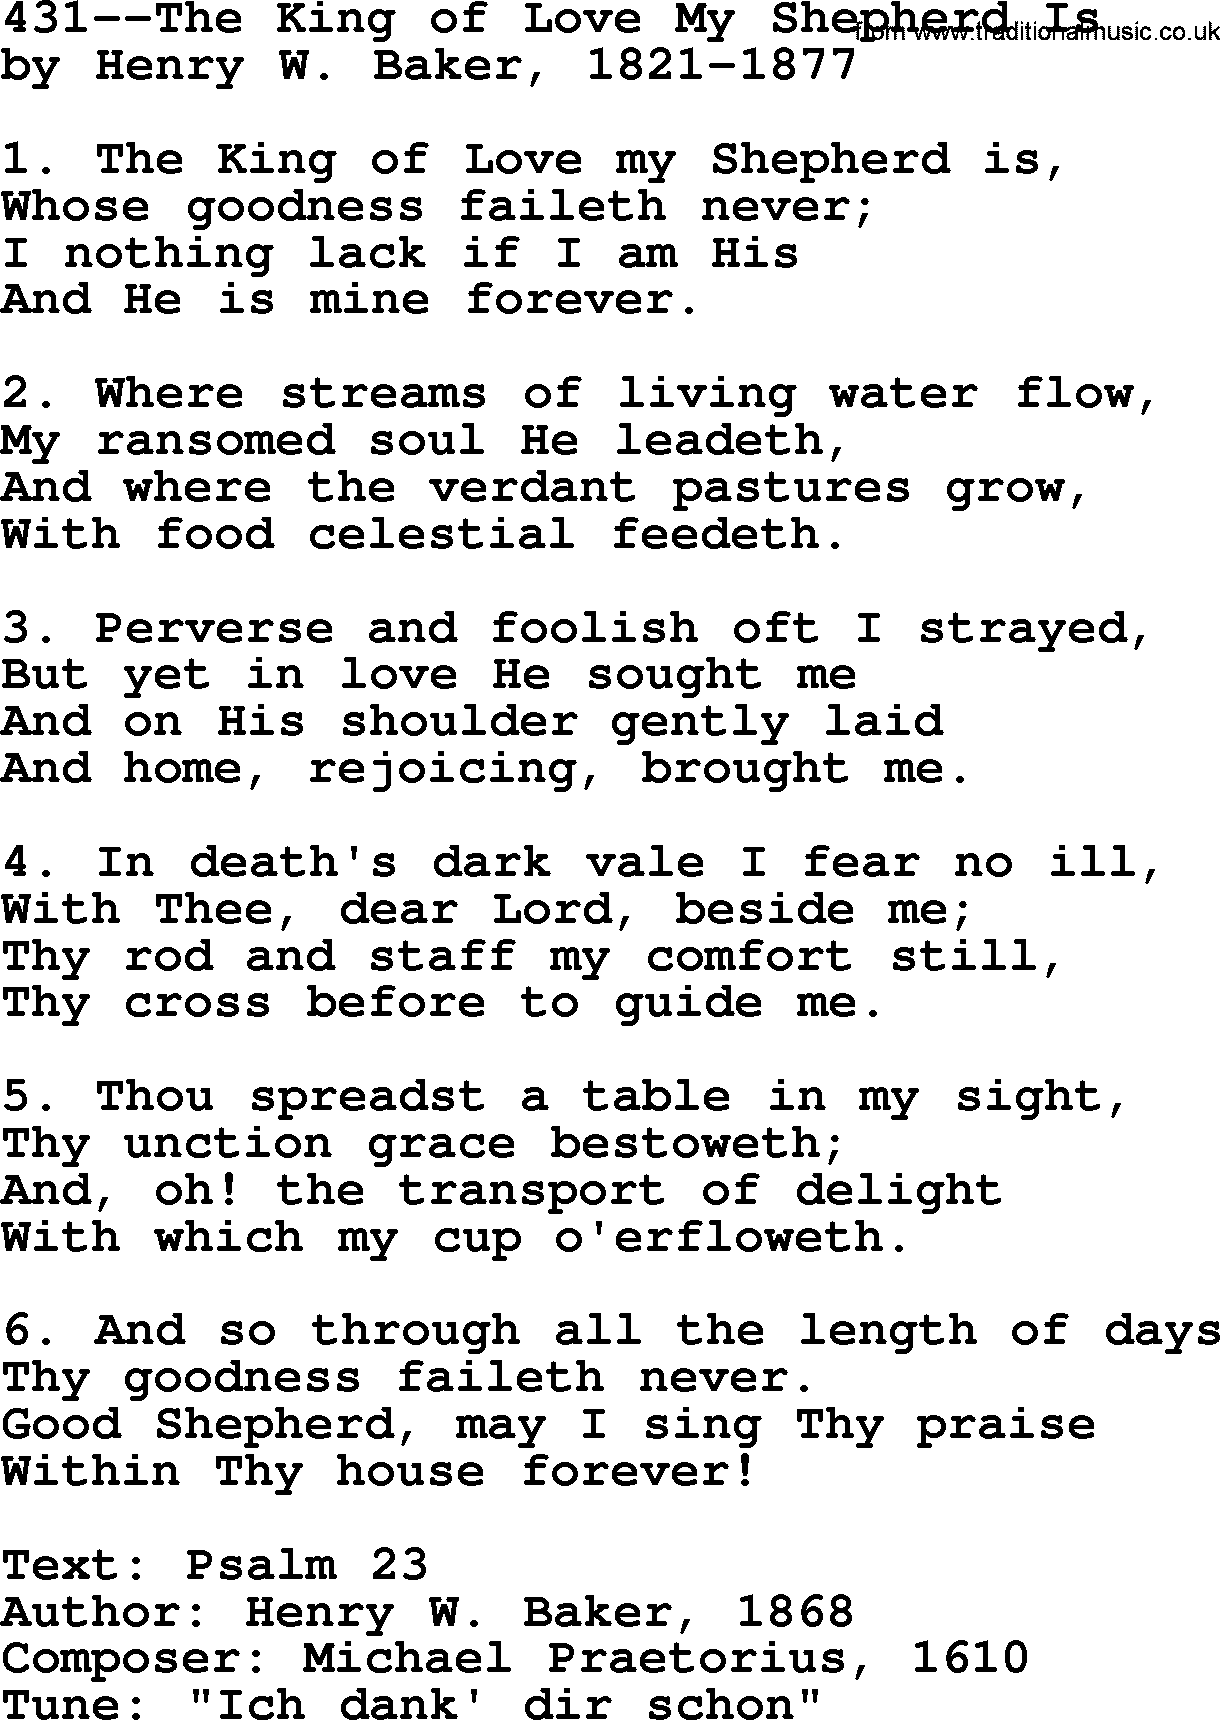 Lutheran Hymn: 431--The King of Love My Shepherd Is.txt lyrics with PDF